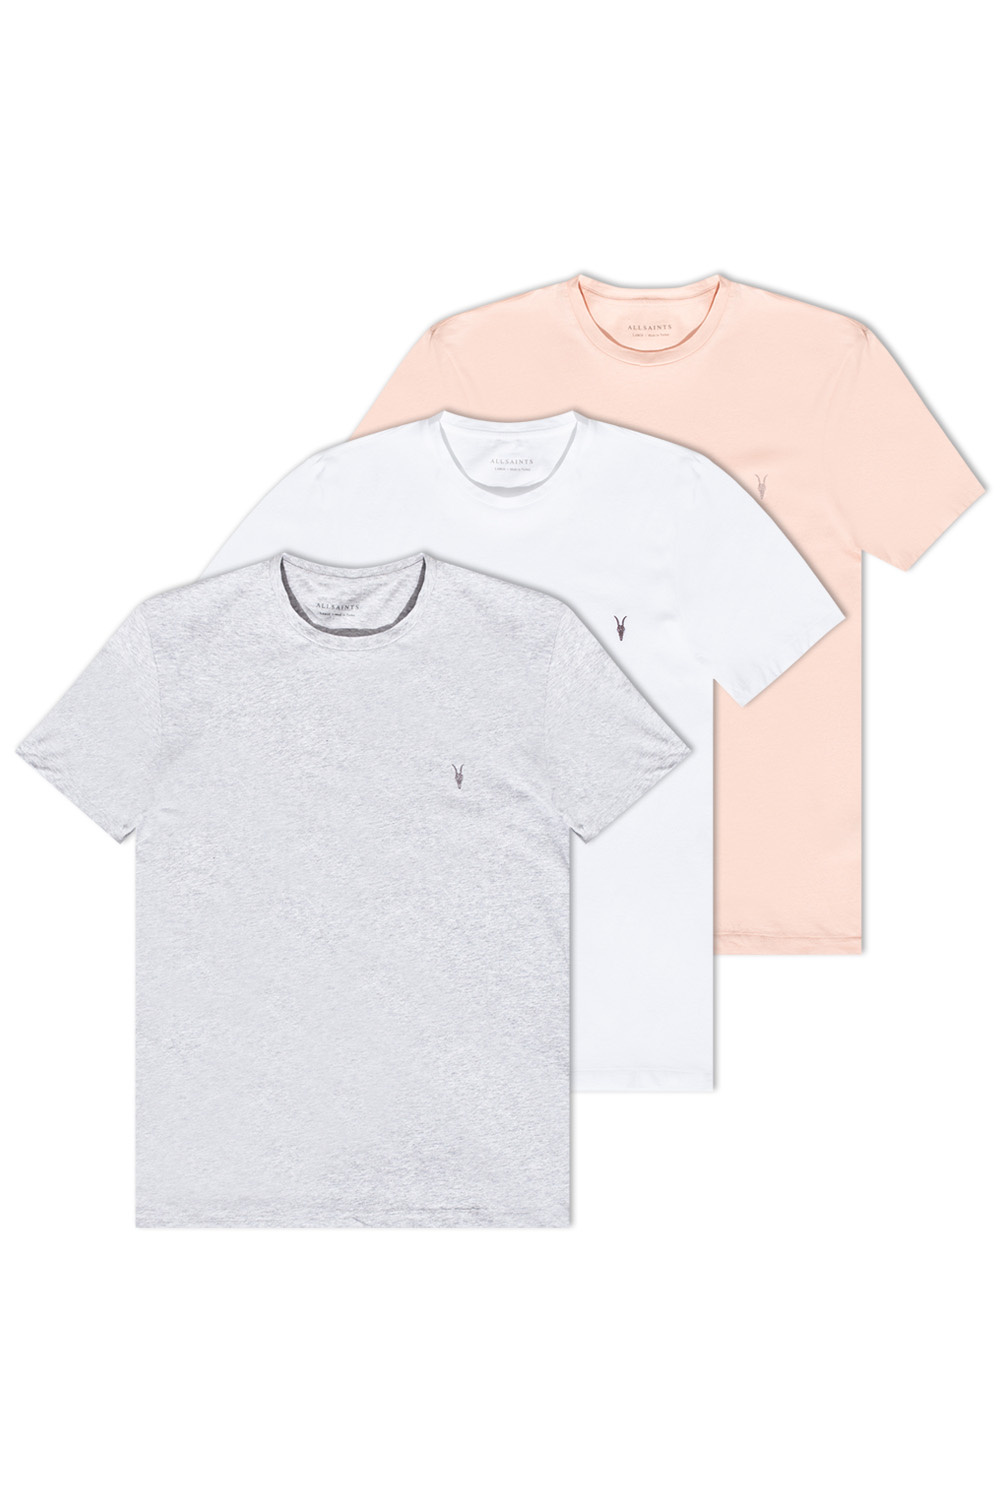 AllSaints ‘Tonic’ branded T-shirt styles three-pack